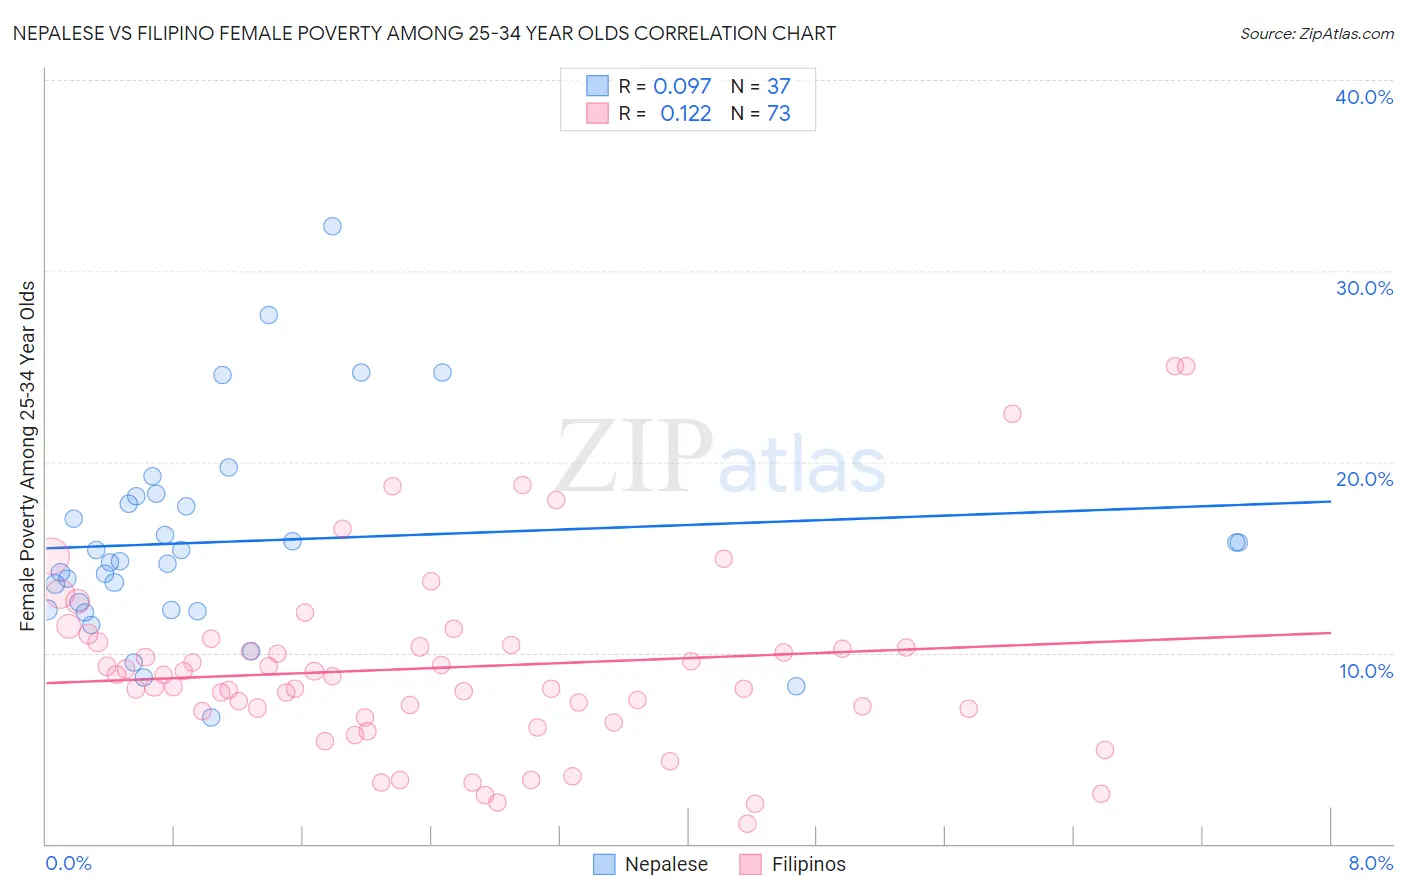 Nepalese vs Filipino Female Poverty Among 25-34 Year Olds